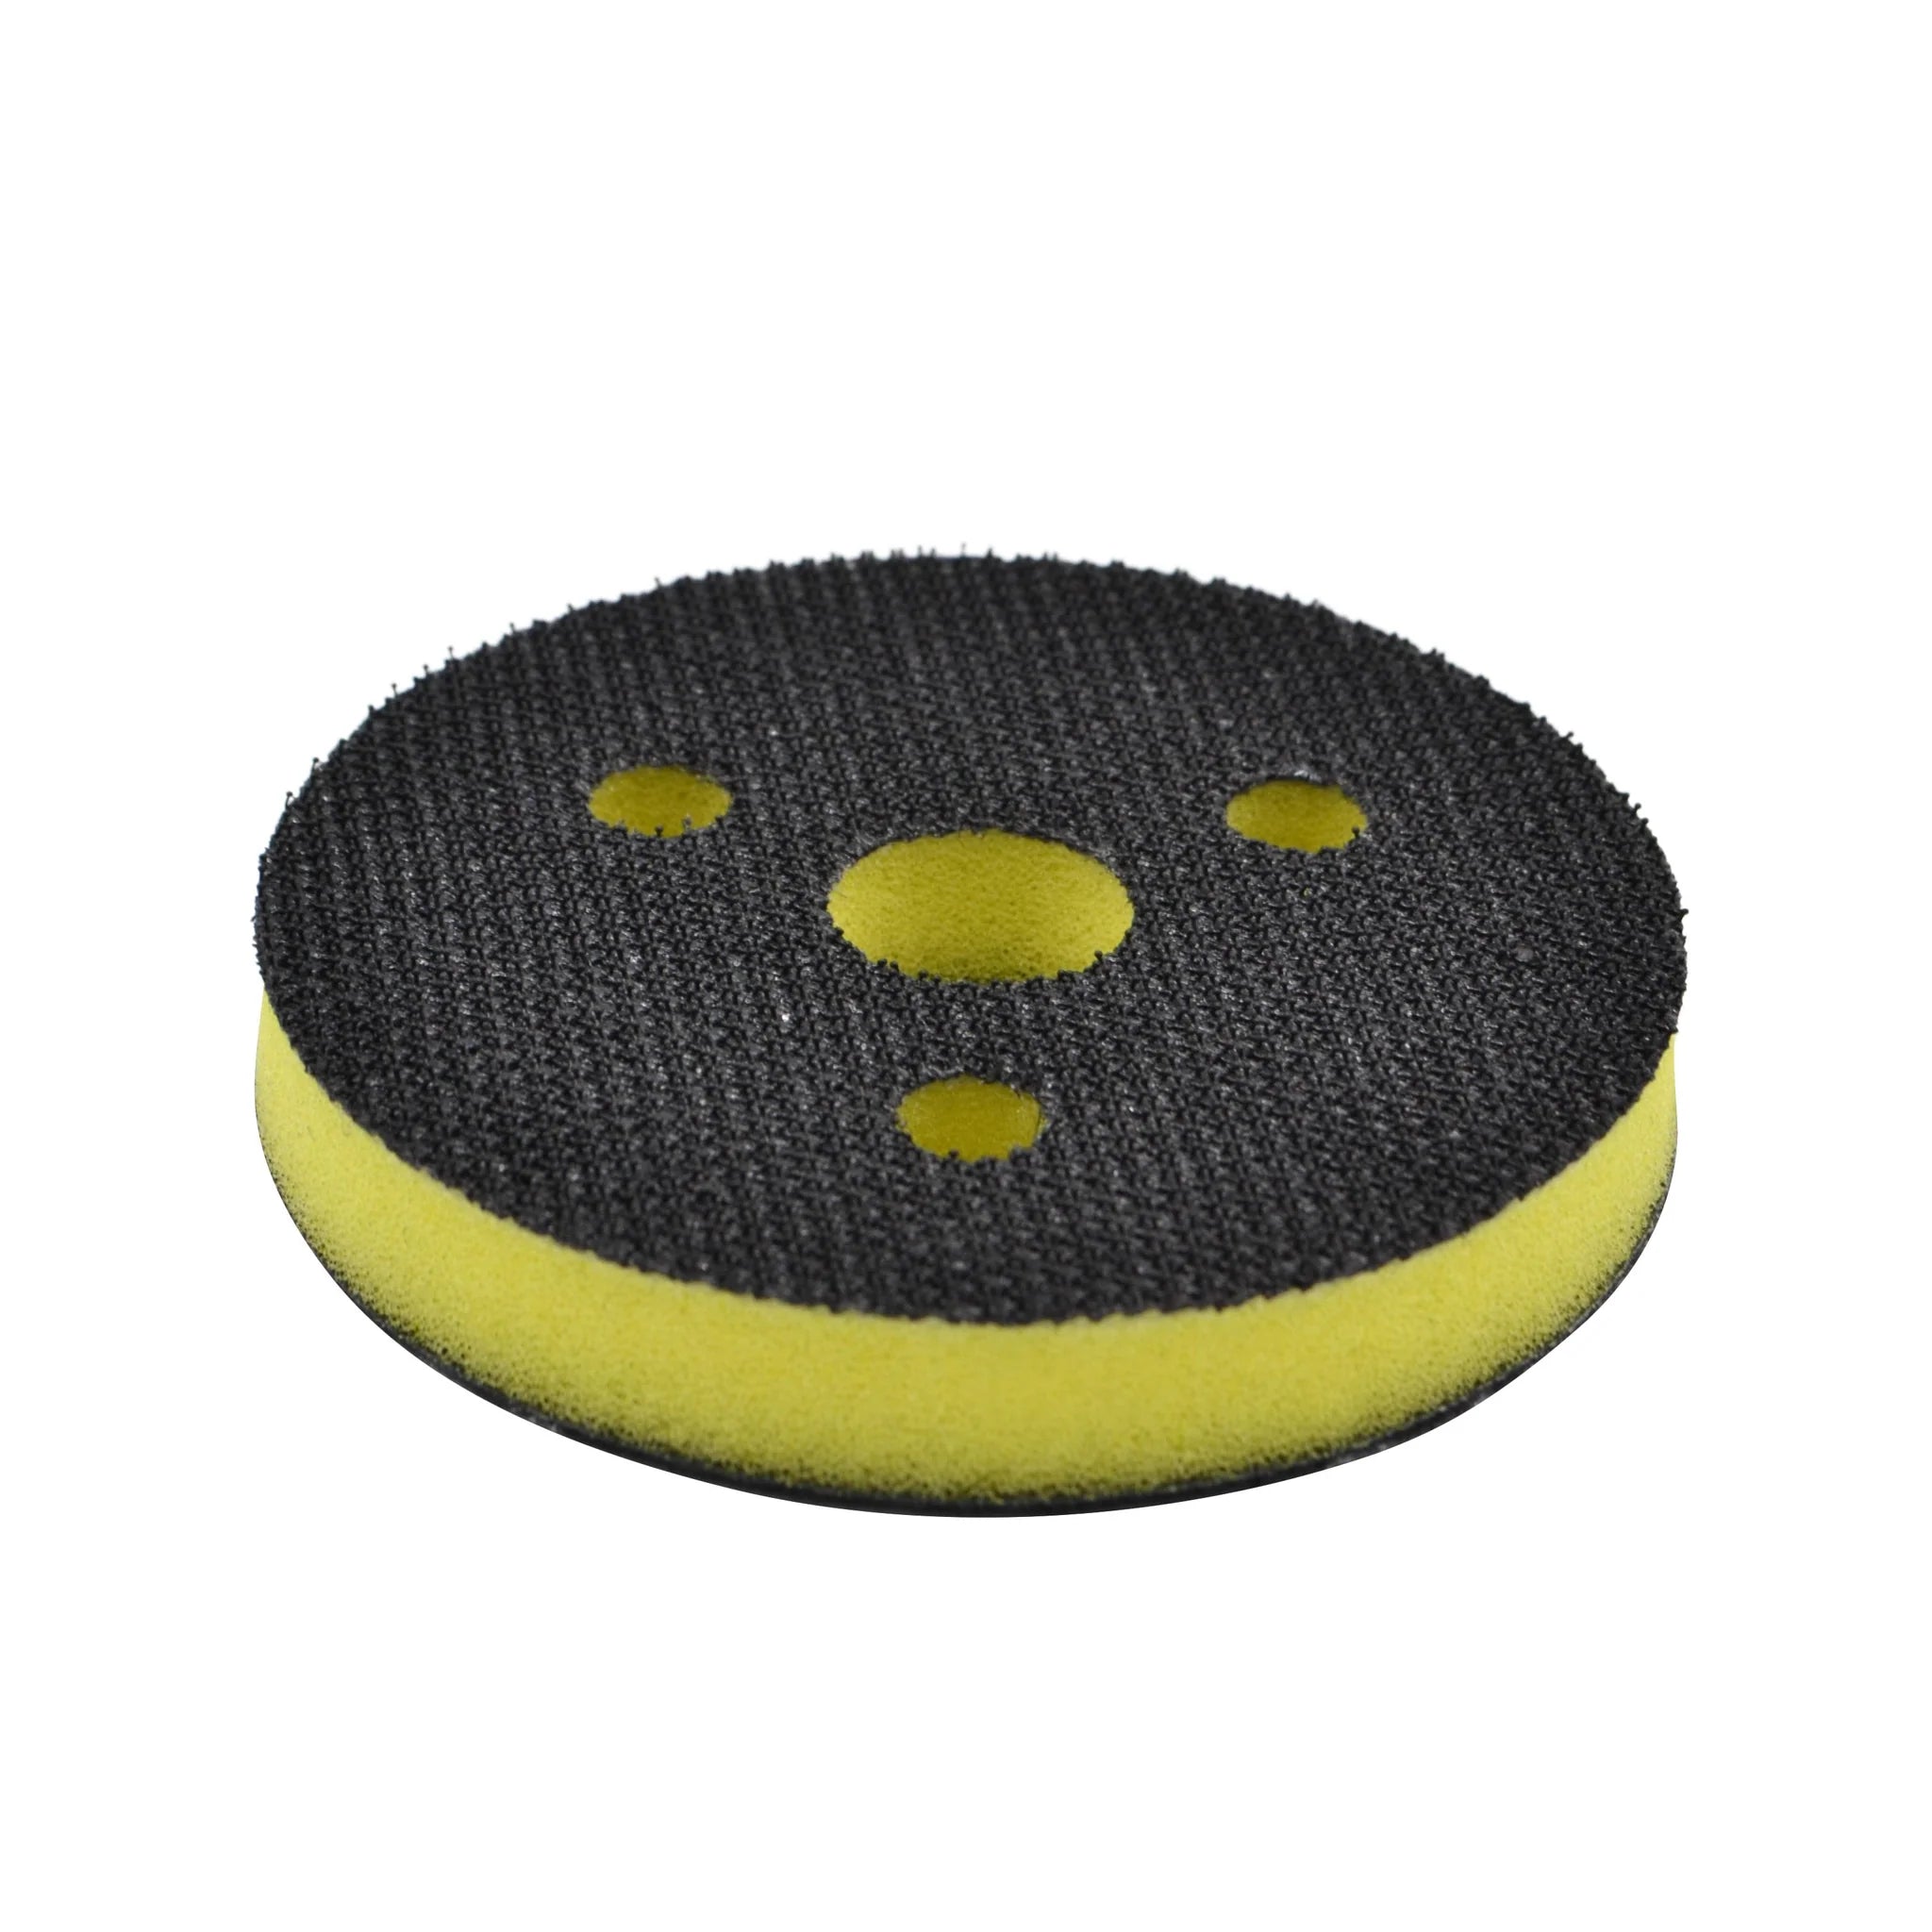 Zvizzer Sanding Interface Yellow Soft Pad - Single (Various Sizes)